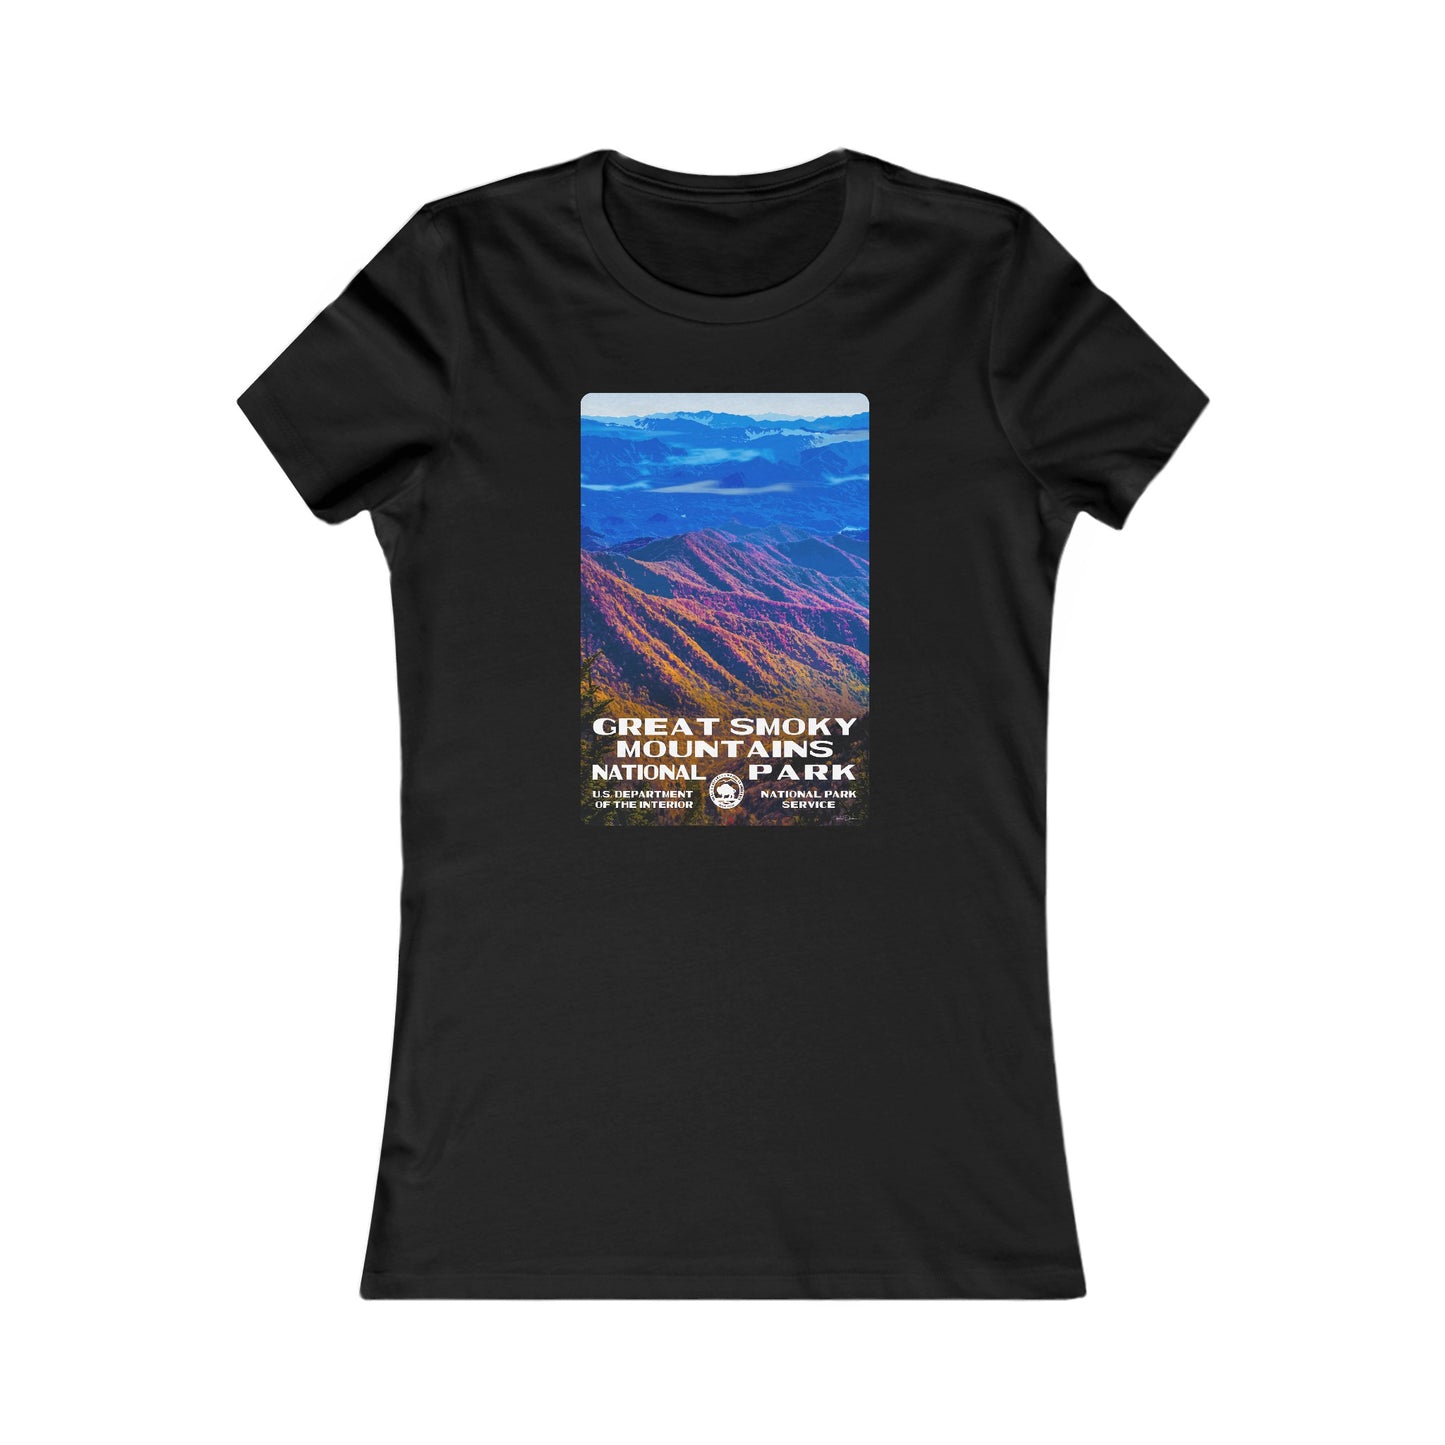 Great Smoky Mountains National Park Women's T-Shirt